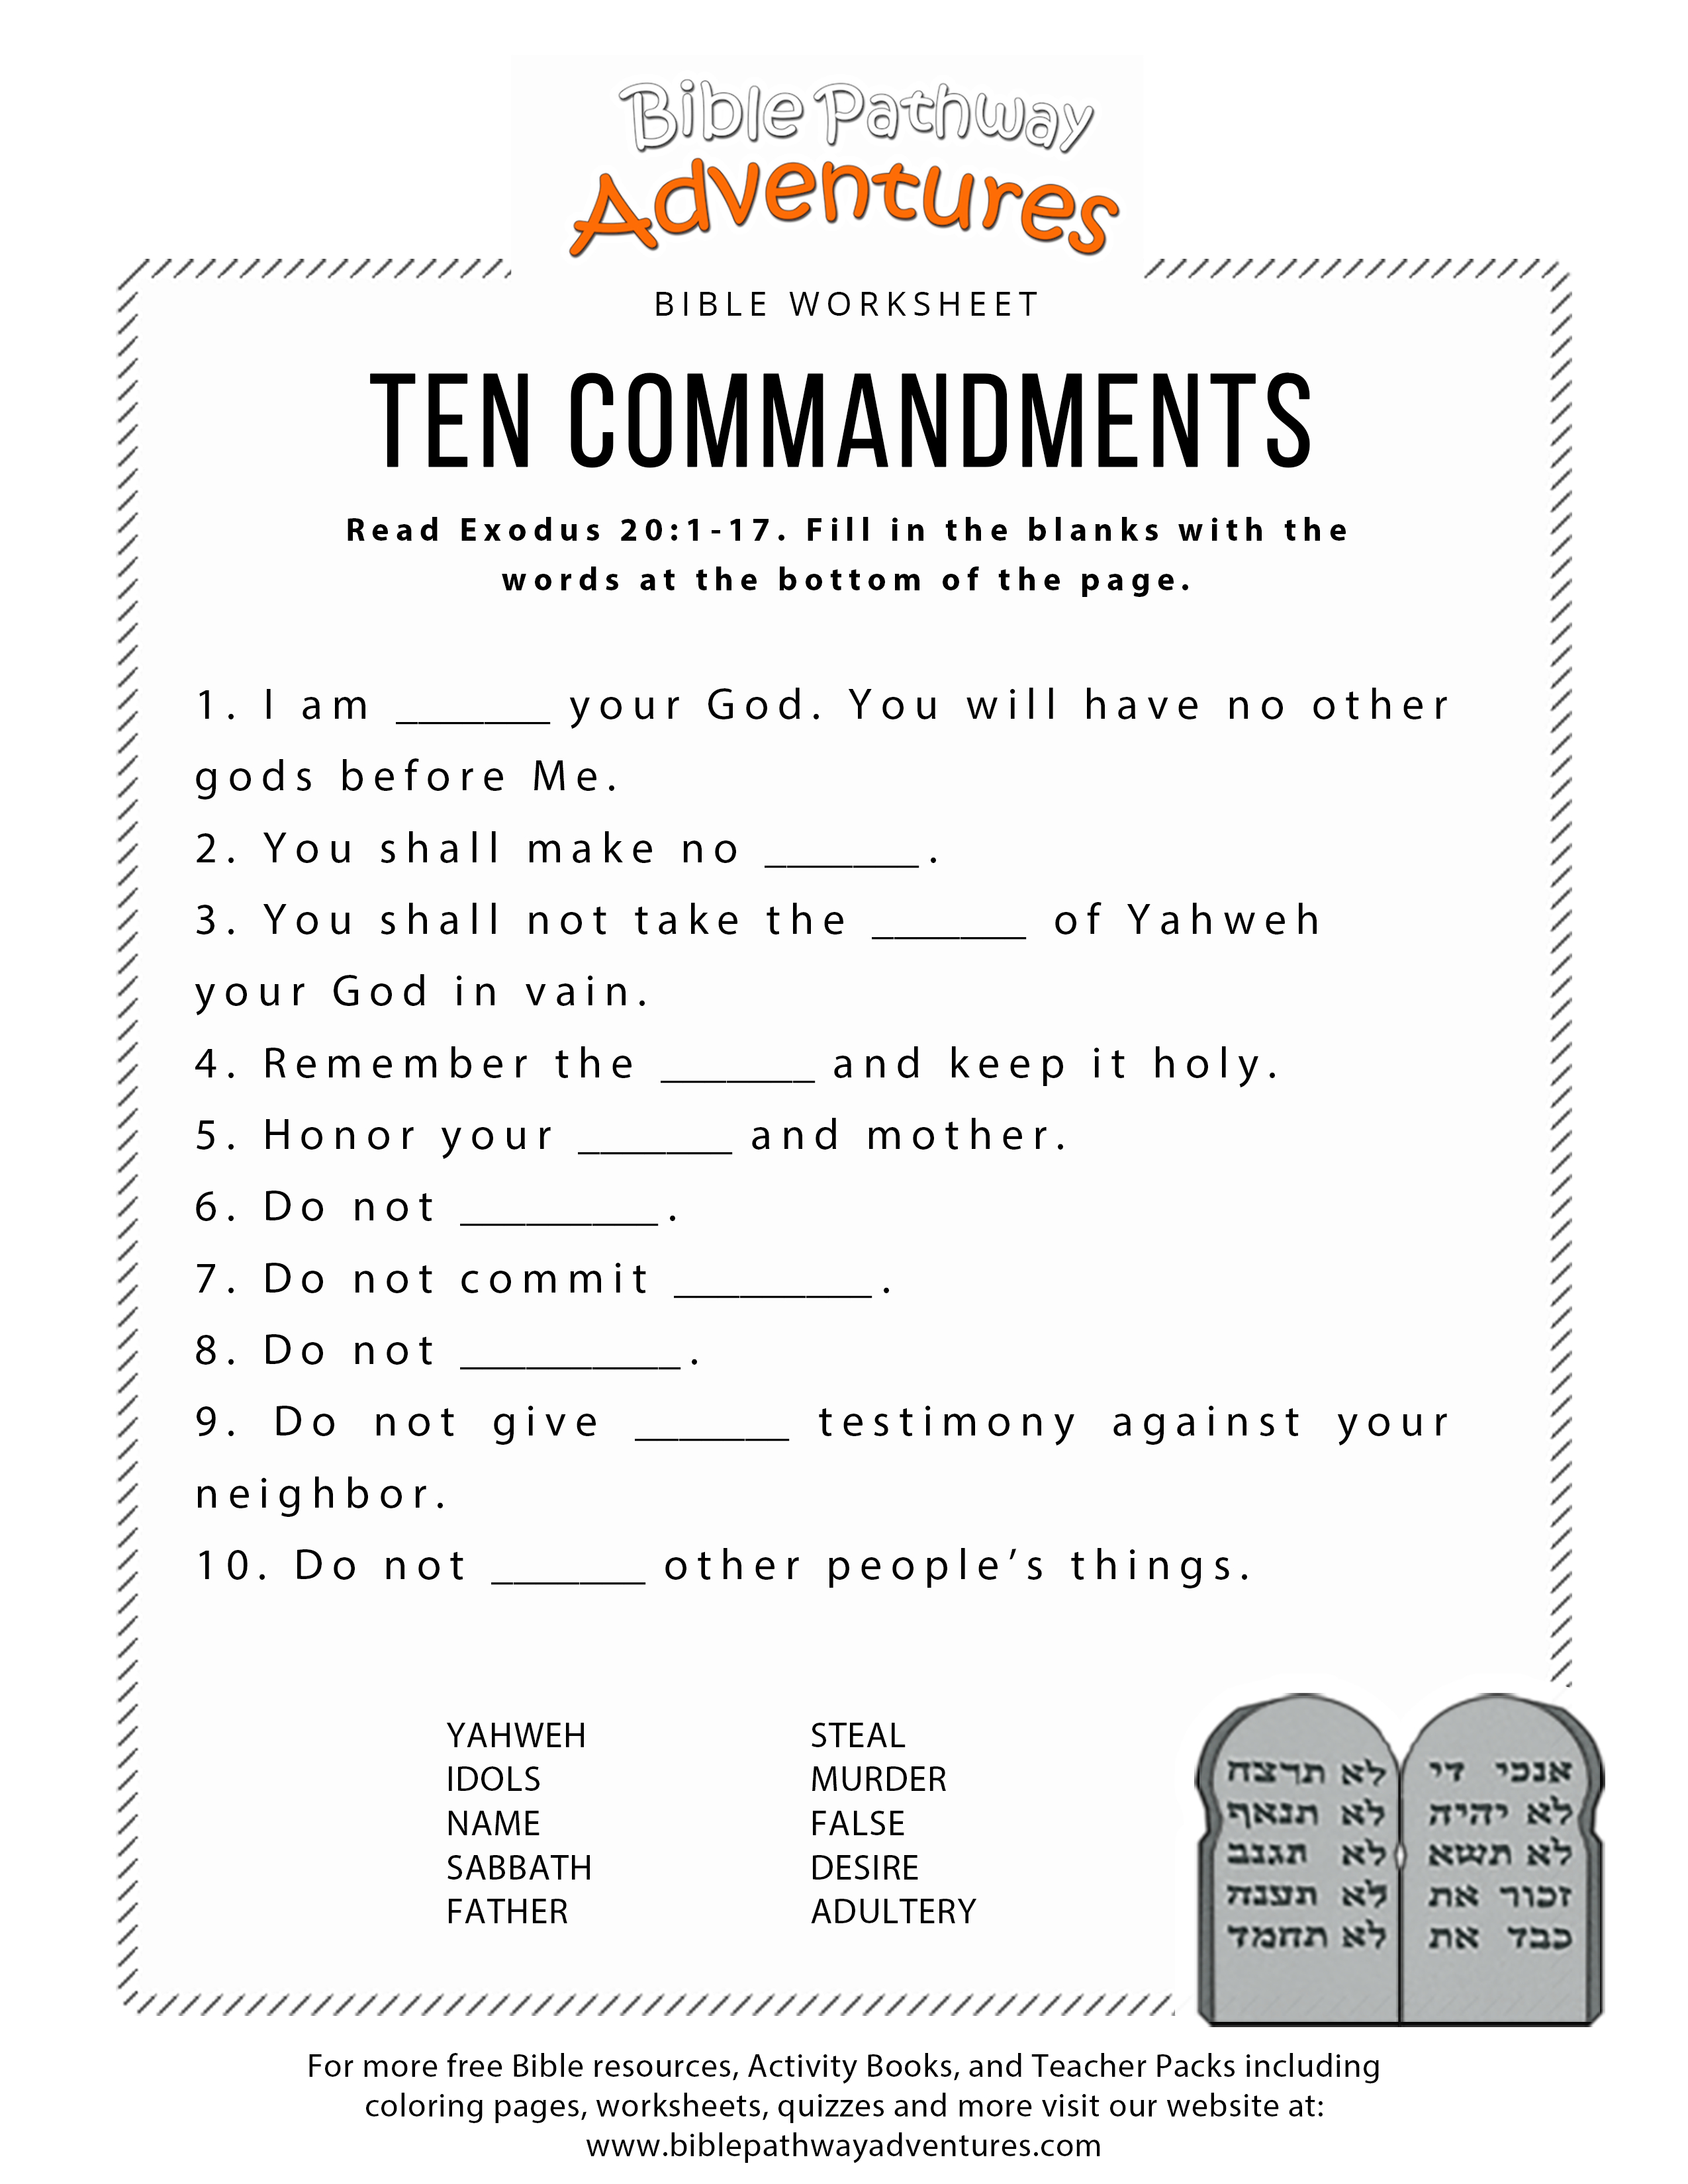 Ten Commandments Worksheet For Kids | Worksheets For Psr | Bible - Free Printable Bible Games For Kids